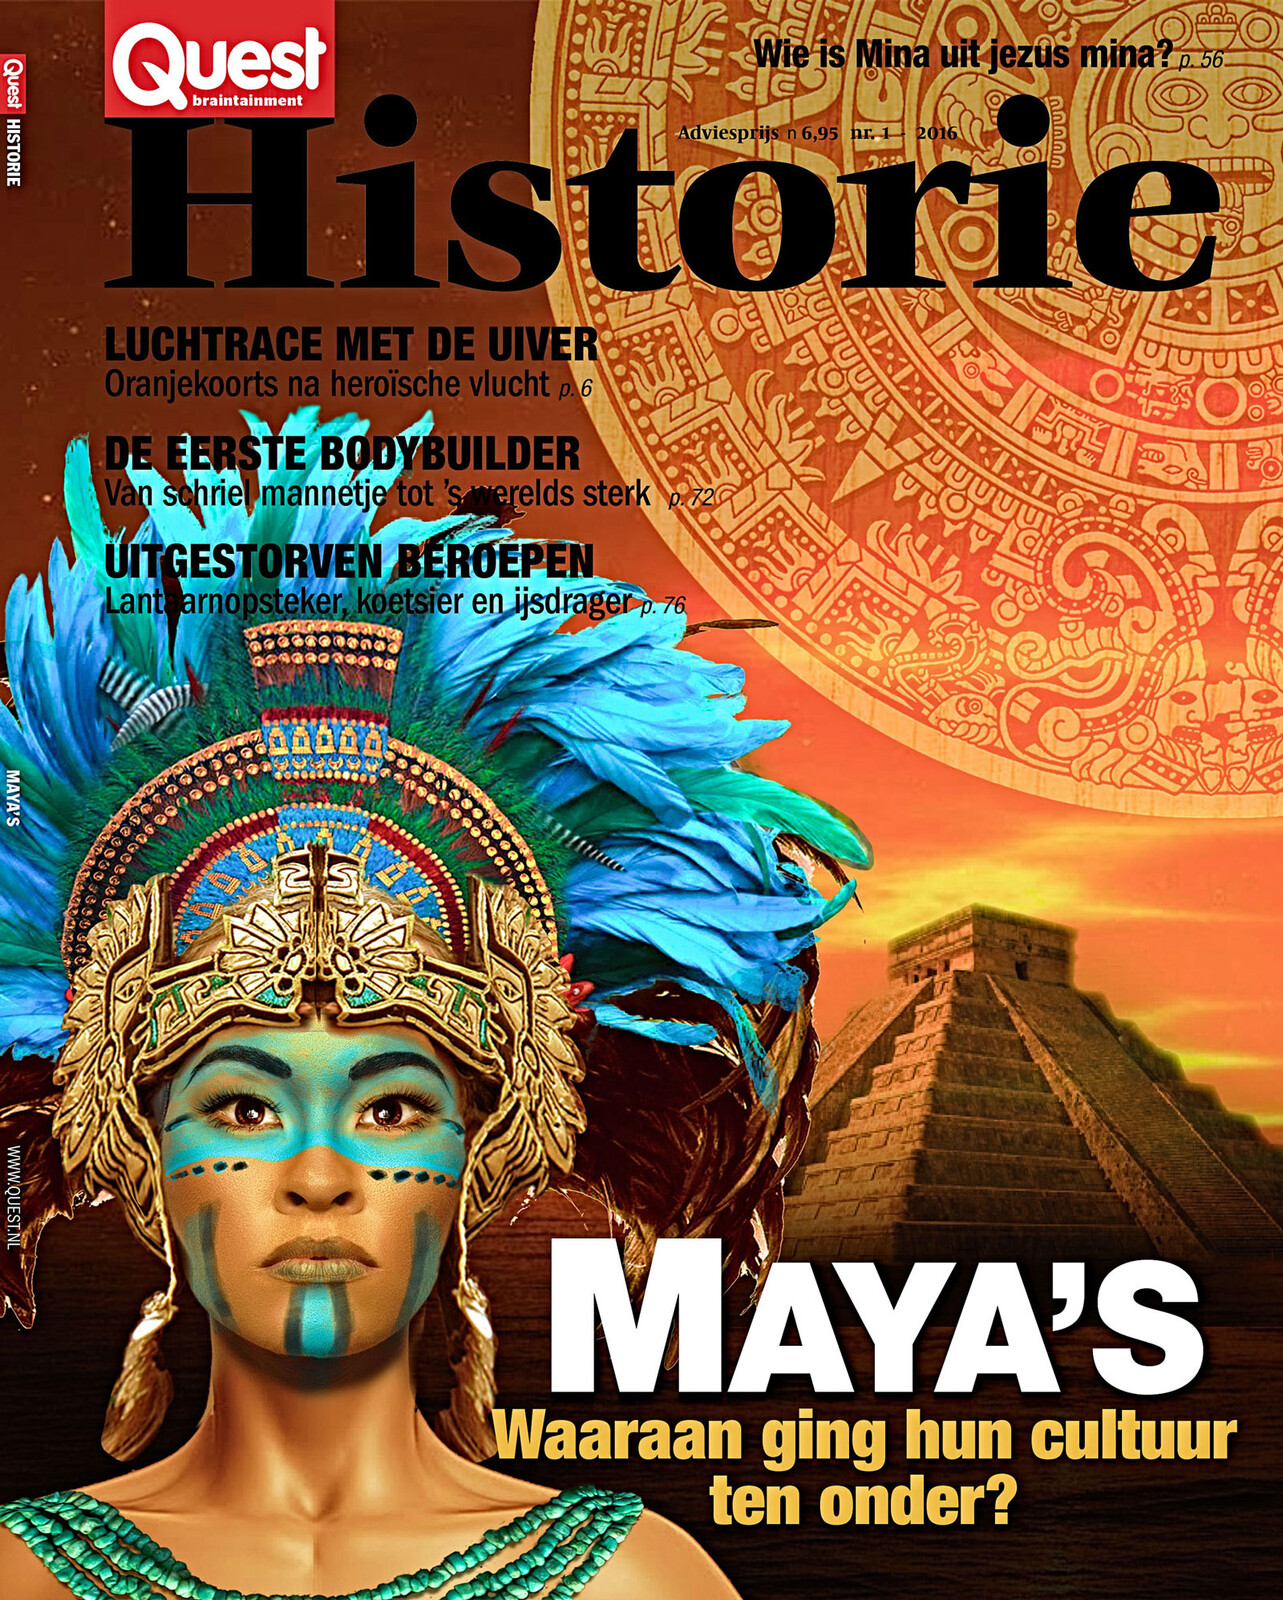 Quest magazine cover (2015)